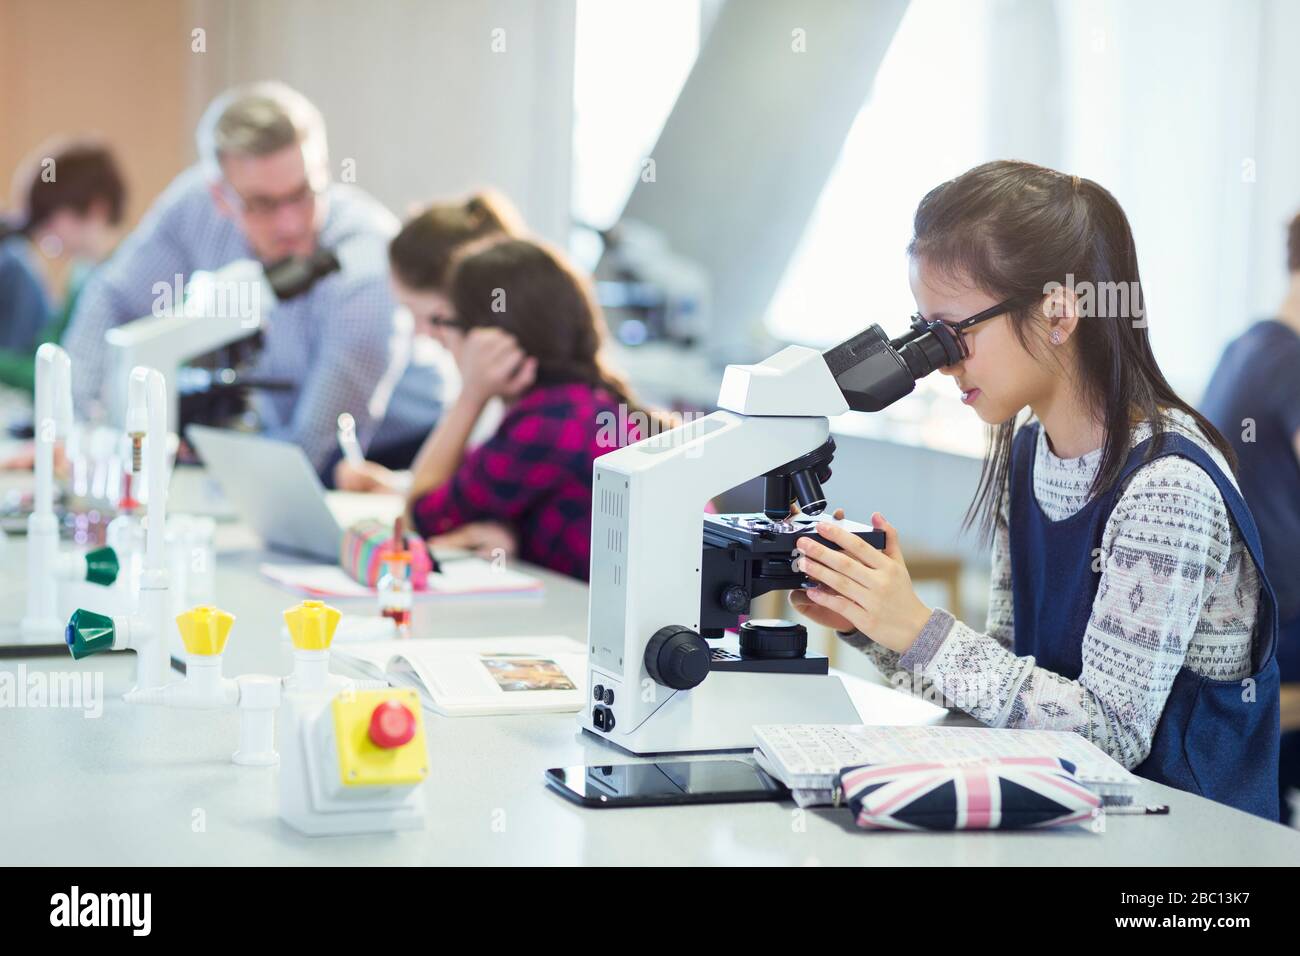 Girl student using microscope, conducting scientific experiment in laboratory classroom Stock Photo